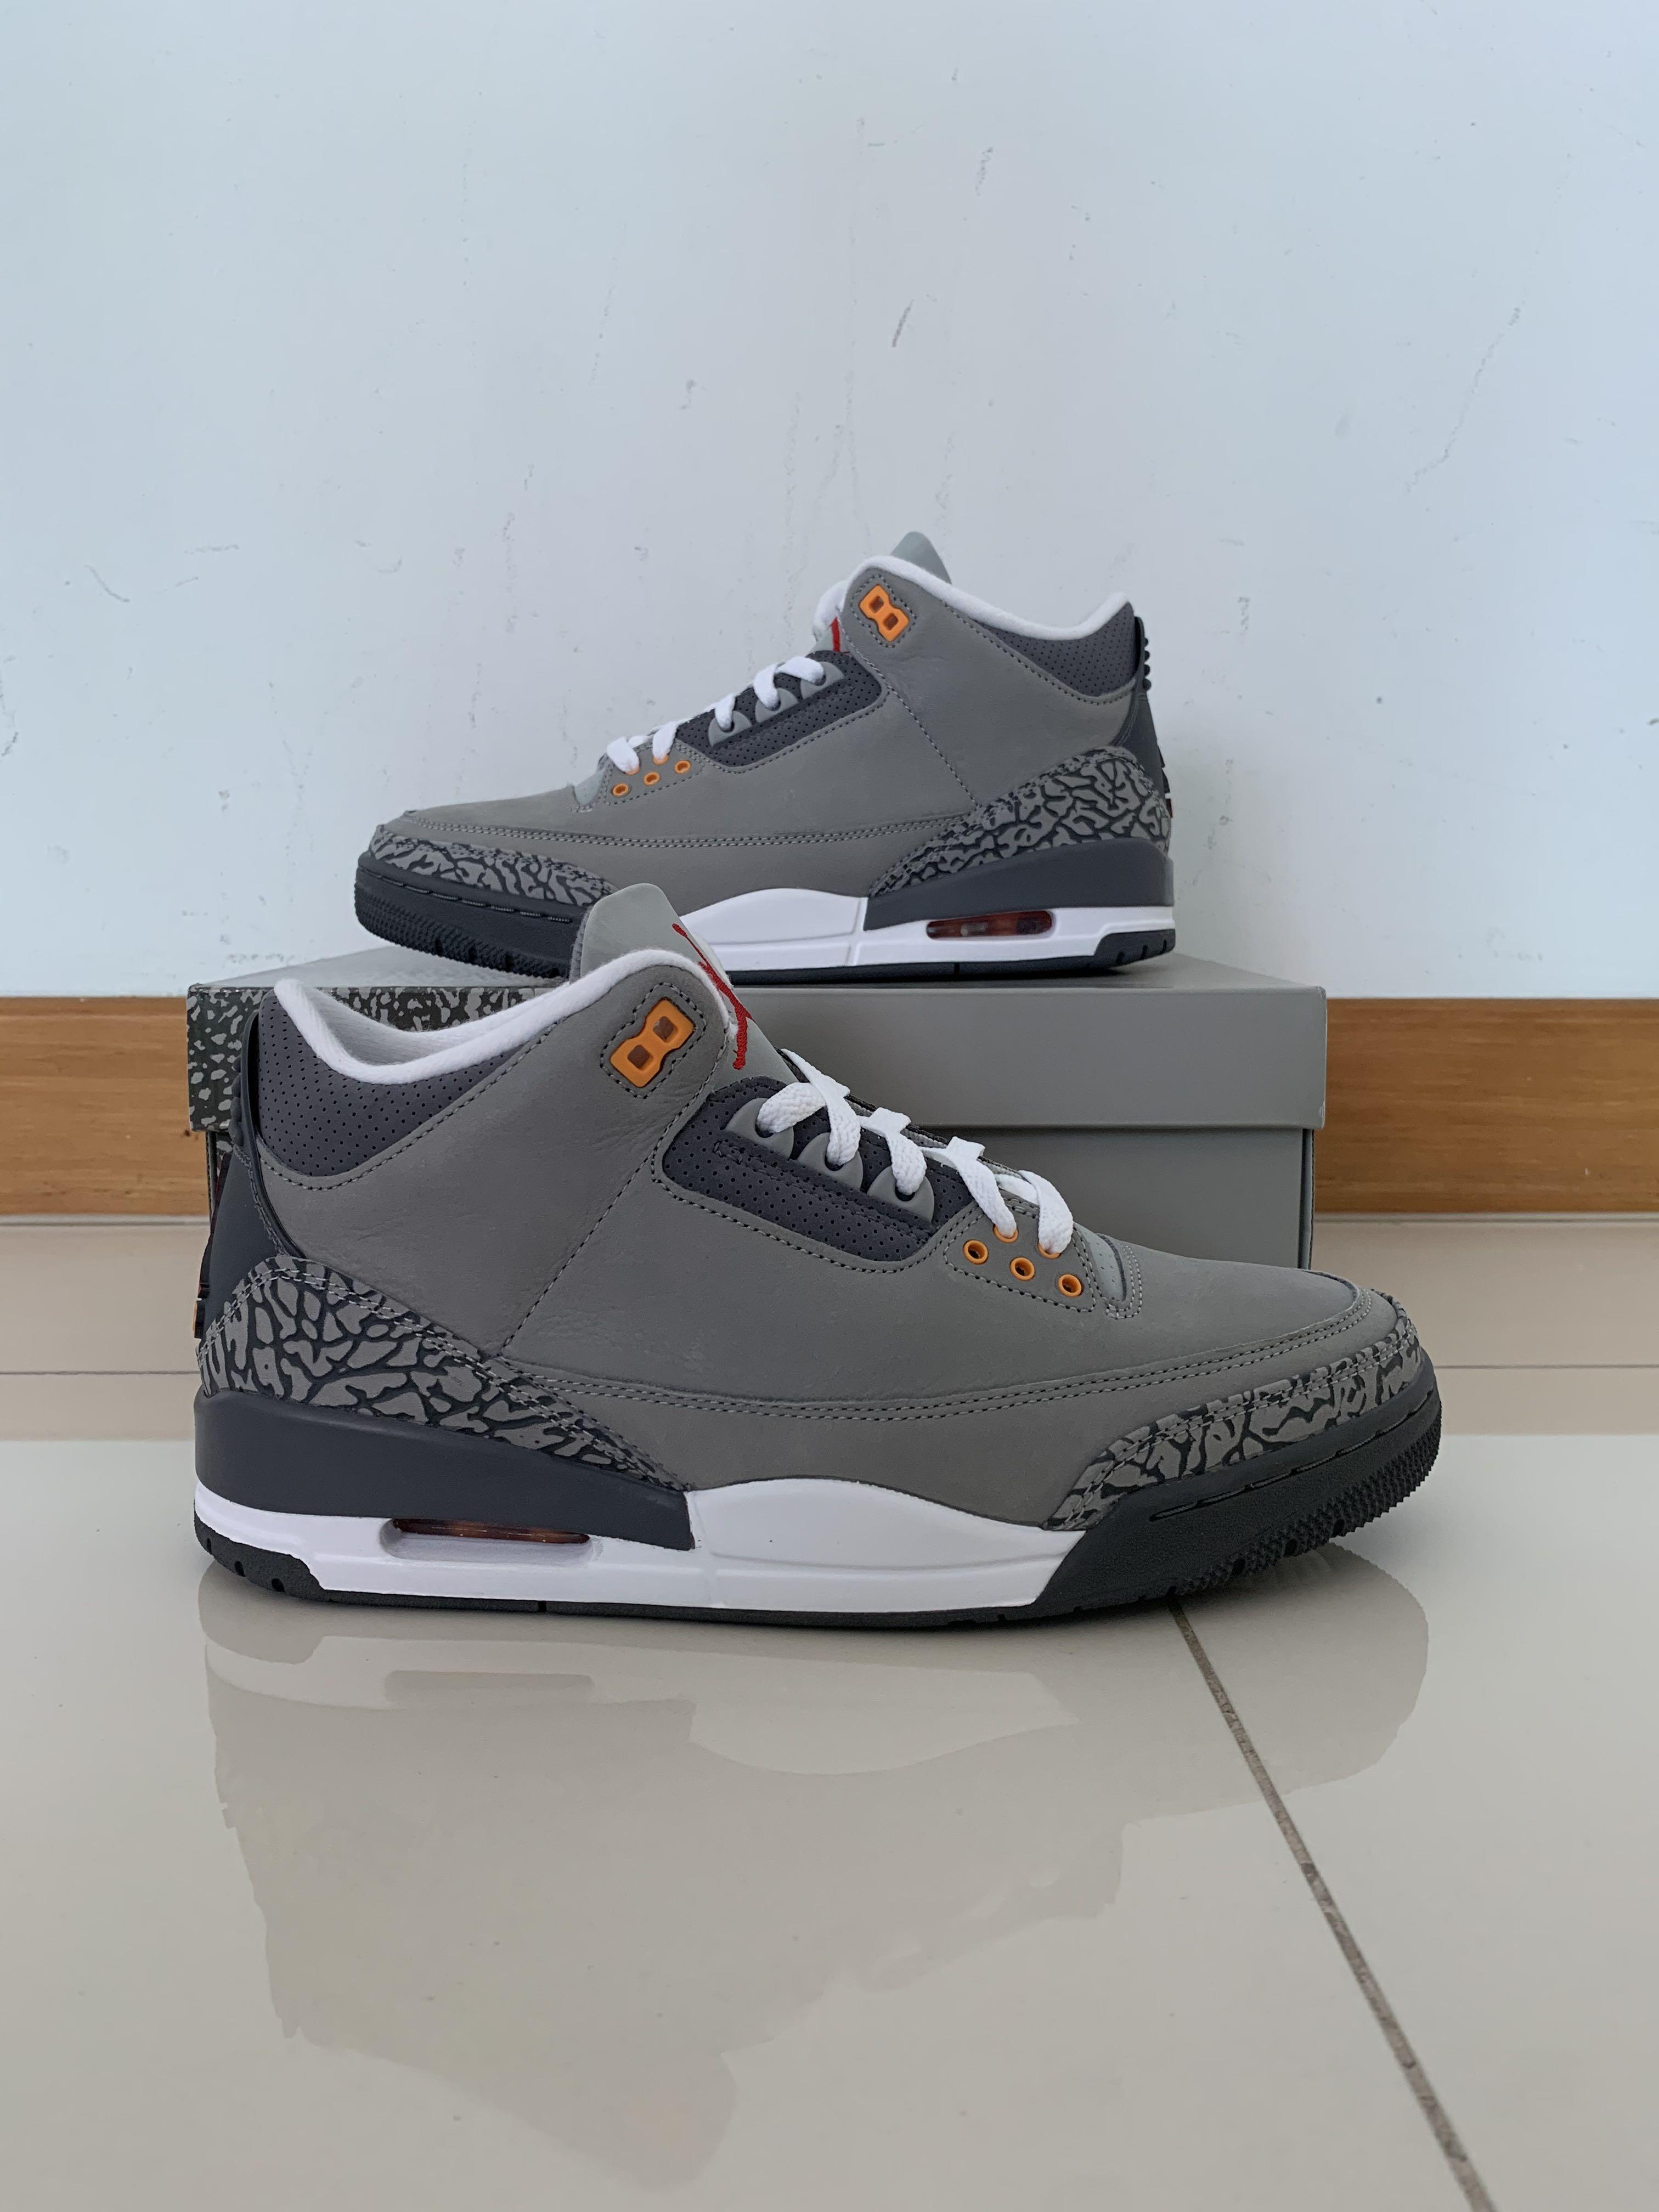 Nike Air Jordan 3 Retro Cool Grey Men S Fashion Footwear Sneakers On Carousell